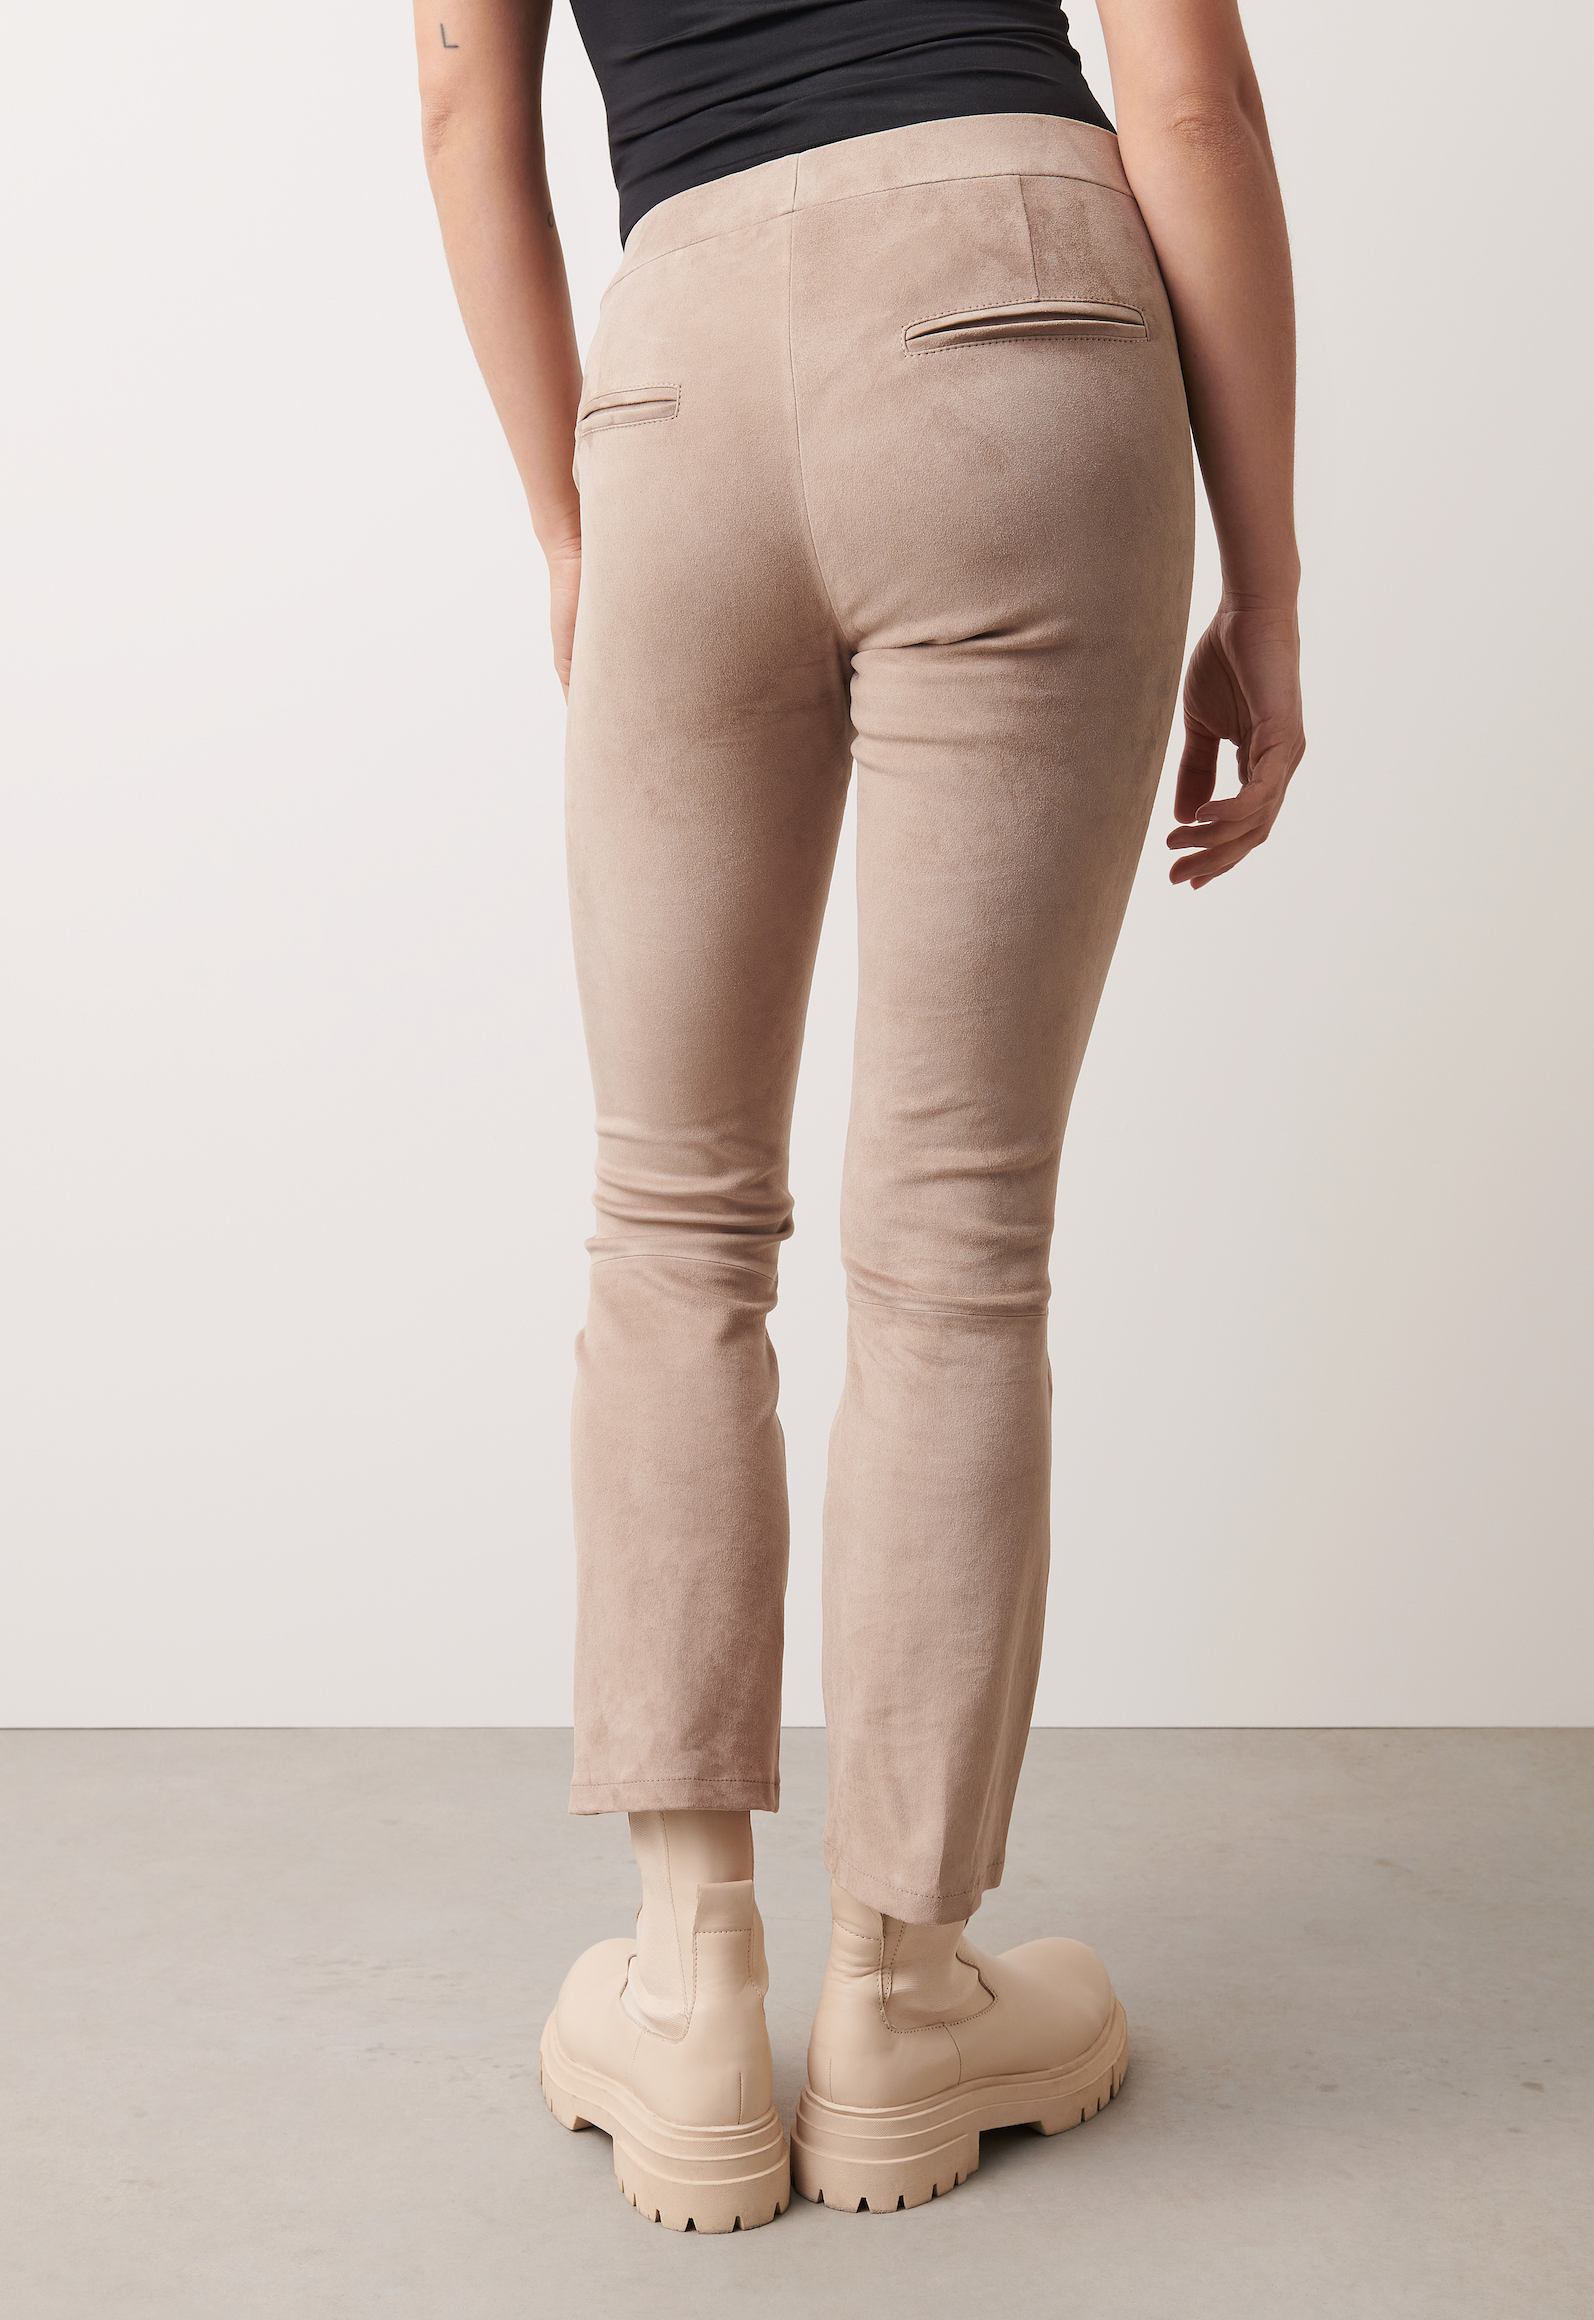 Clovia Women's Comfort-Fit High Waist Flared Yoga Pants (AB0090B08_Navy  Blue_S) : : Fashion